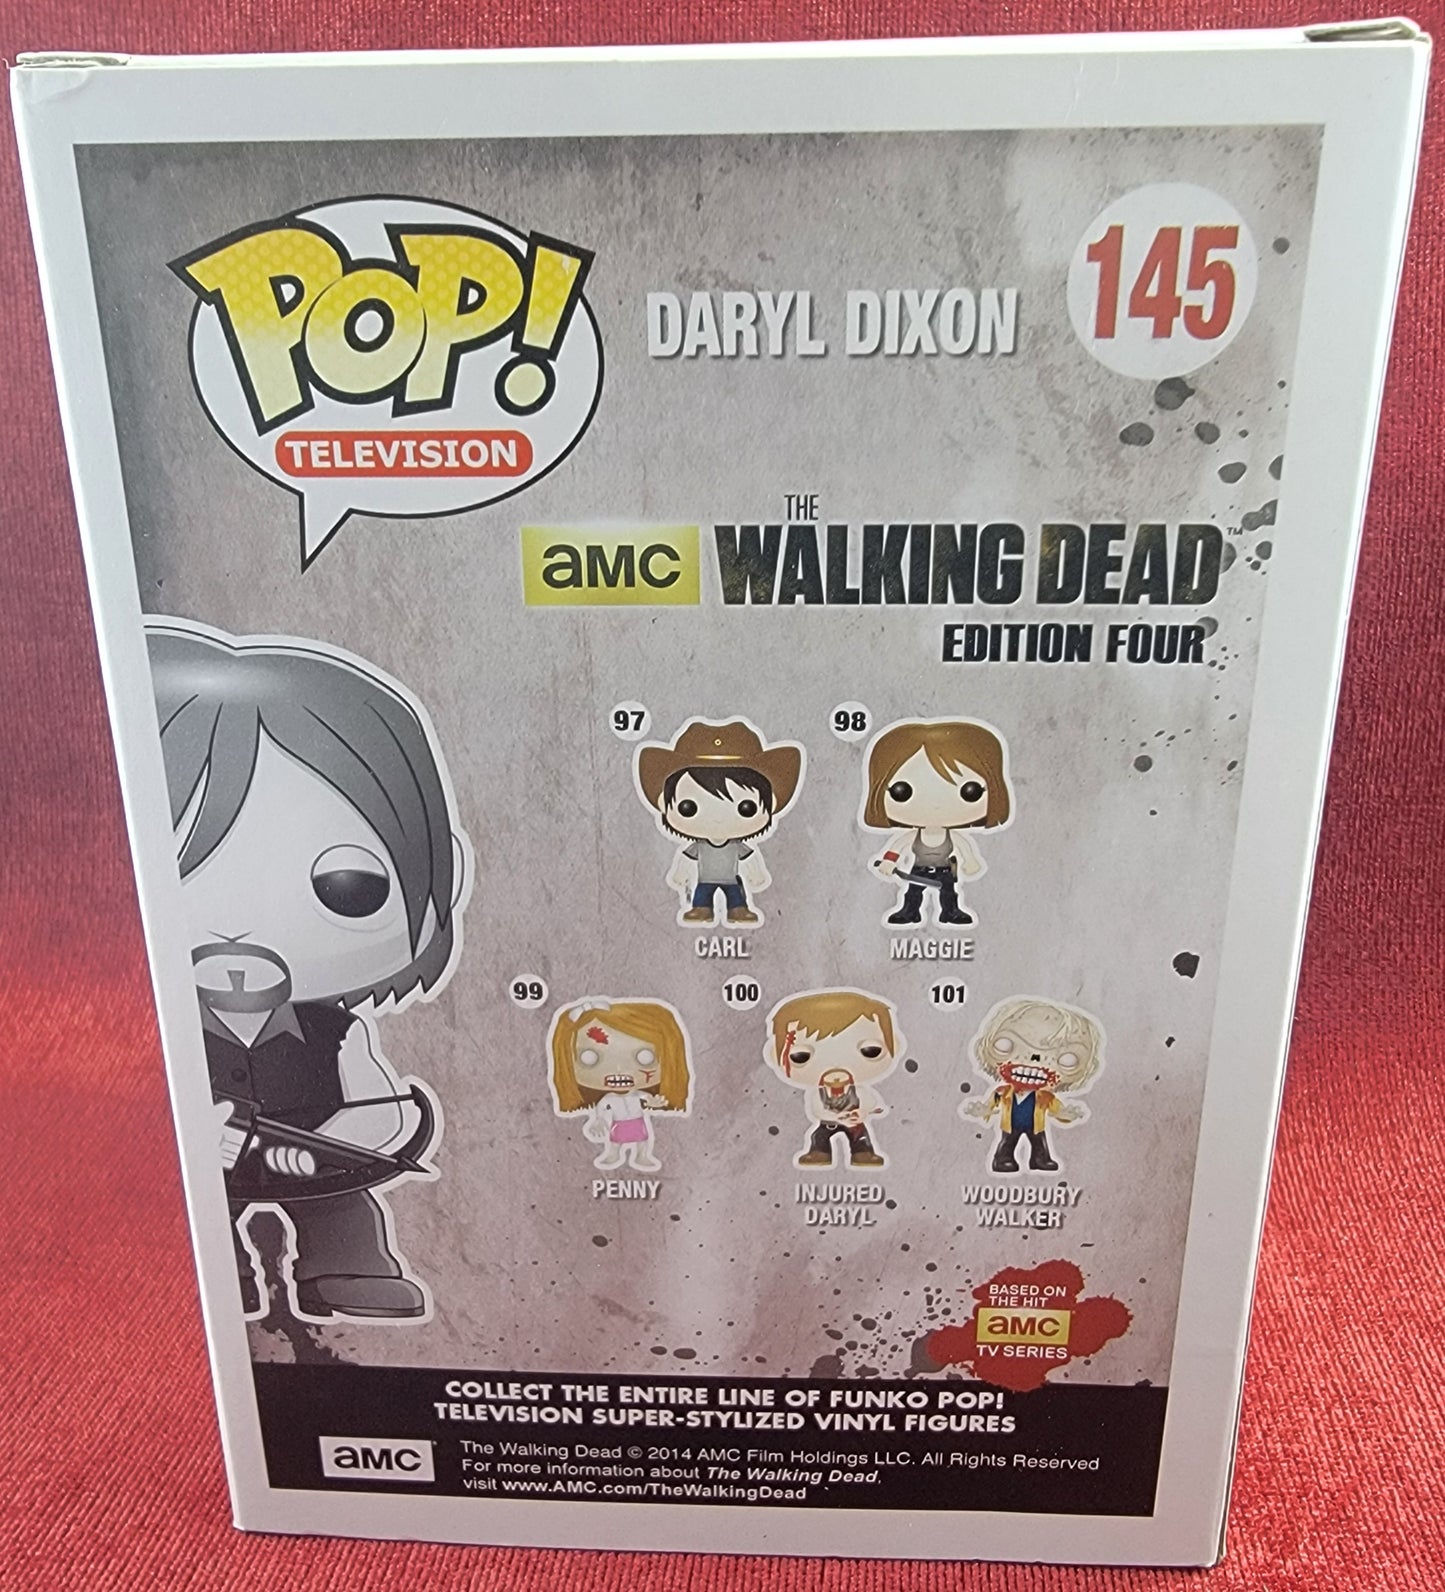 Daryl Dixon Wal-Mart exclusive funko # 145 (nib)
With pop protector